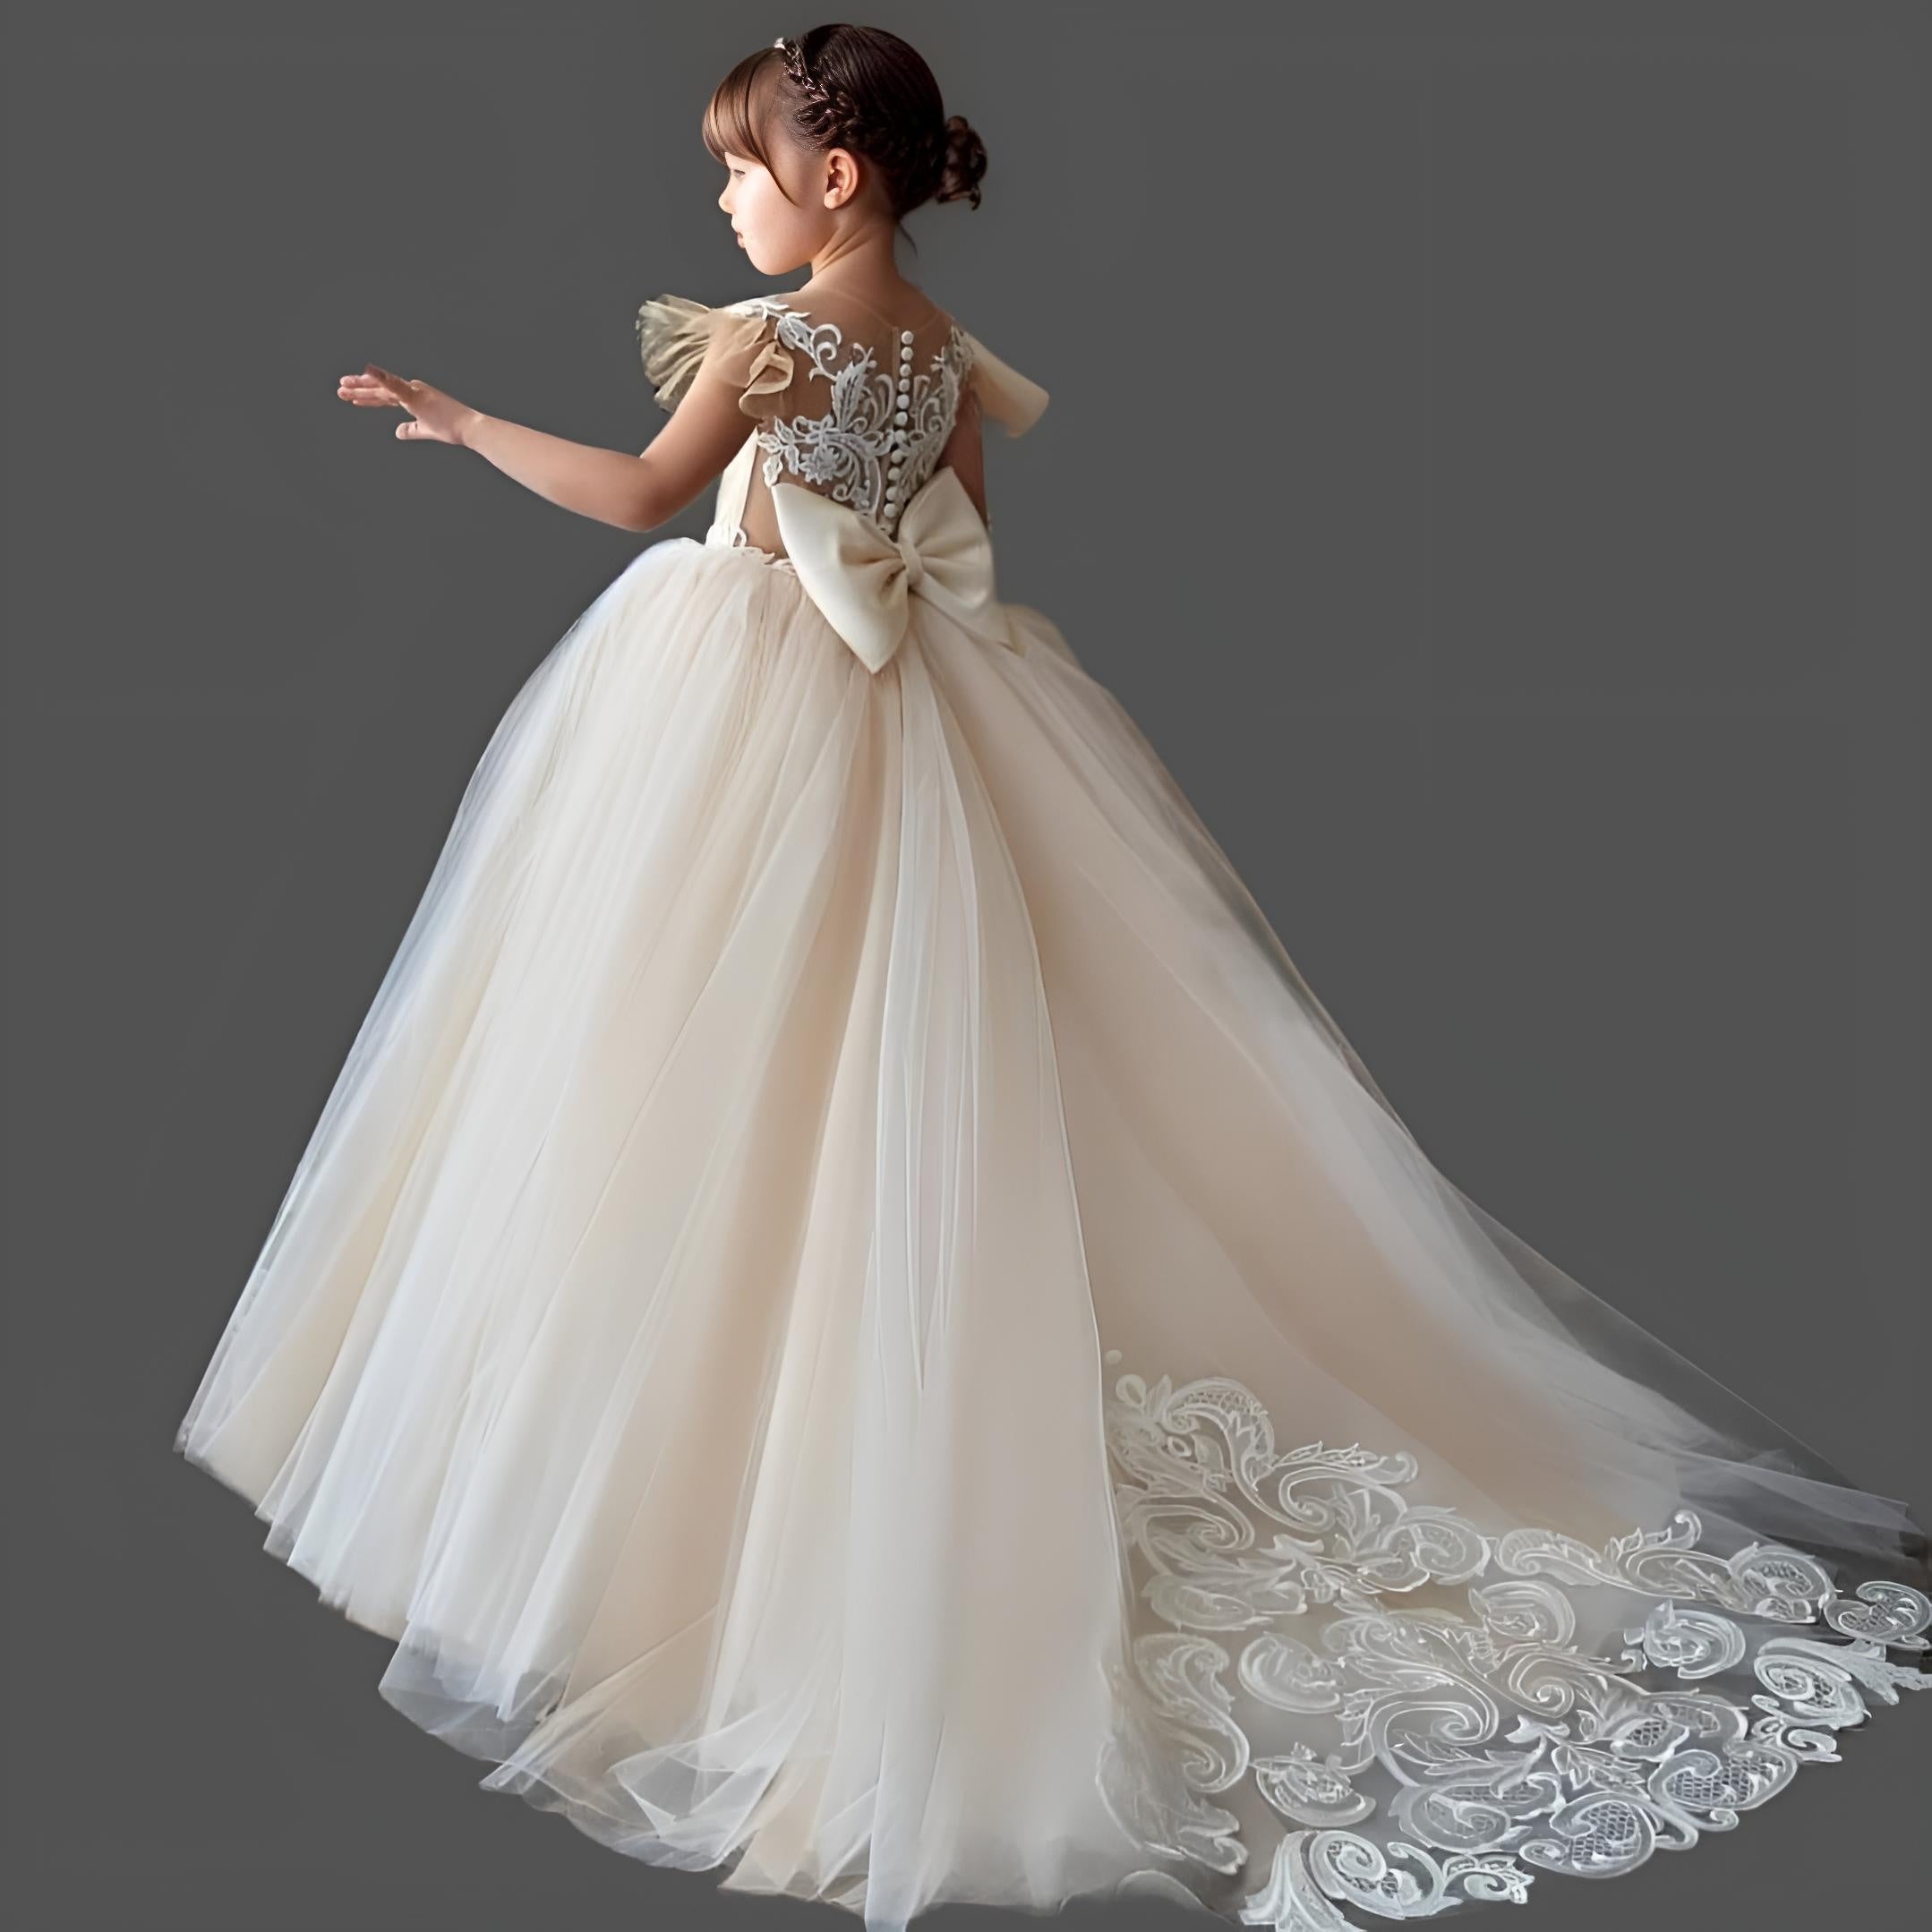 Top 81+ Wedding Dresses For Girls | ShaadiSaga | Christian wedding gowns,  Christian wedding dress, Wedding gowns online